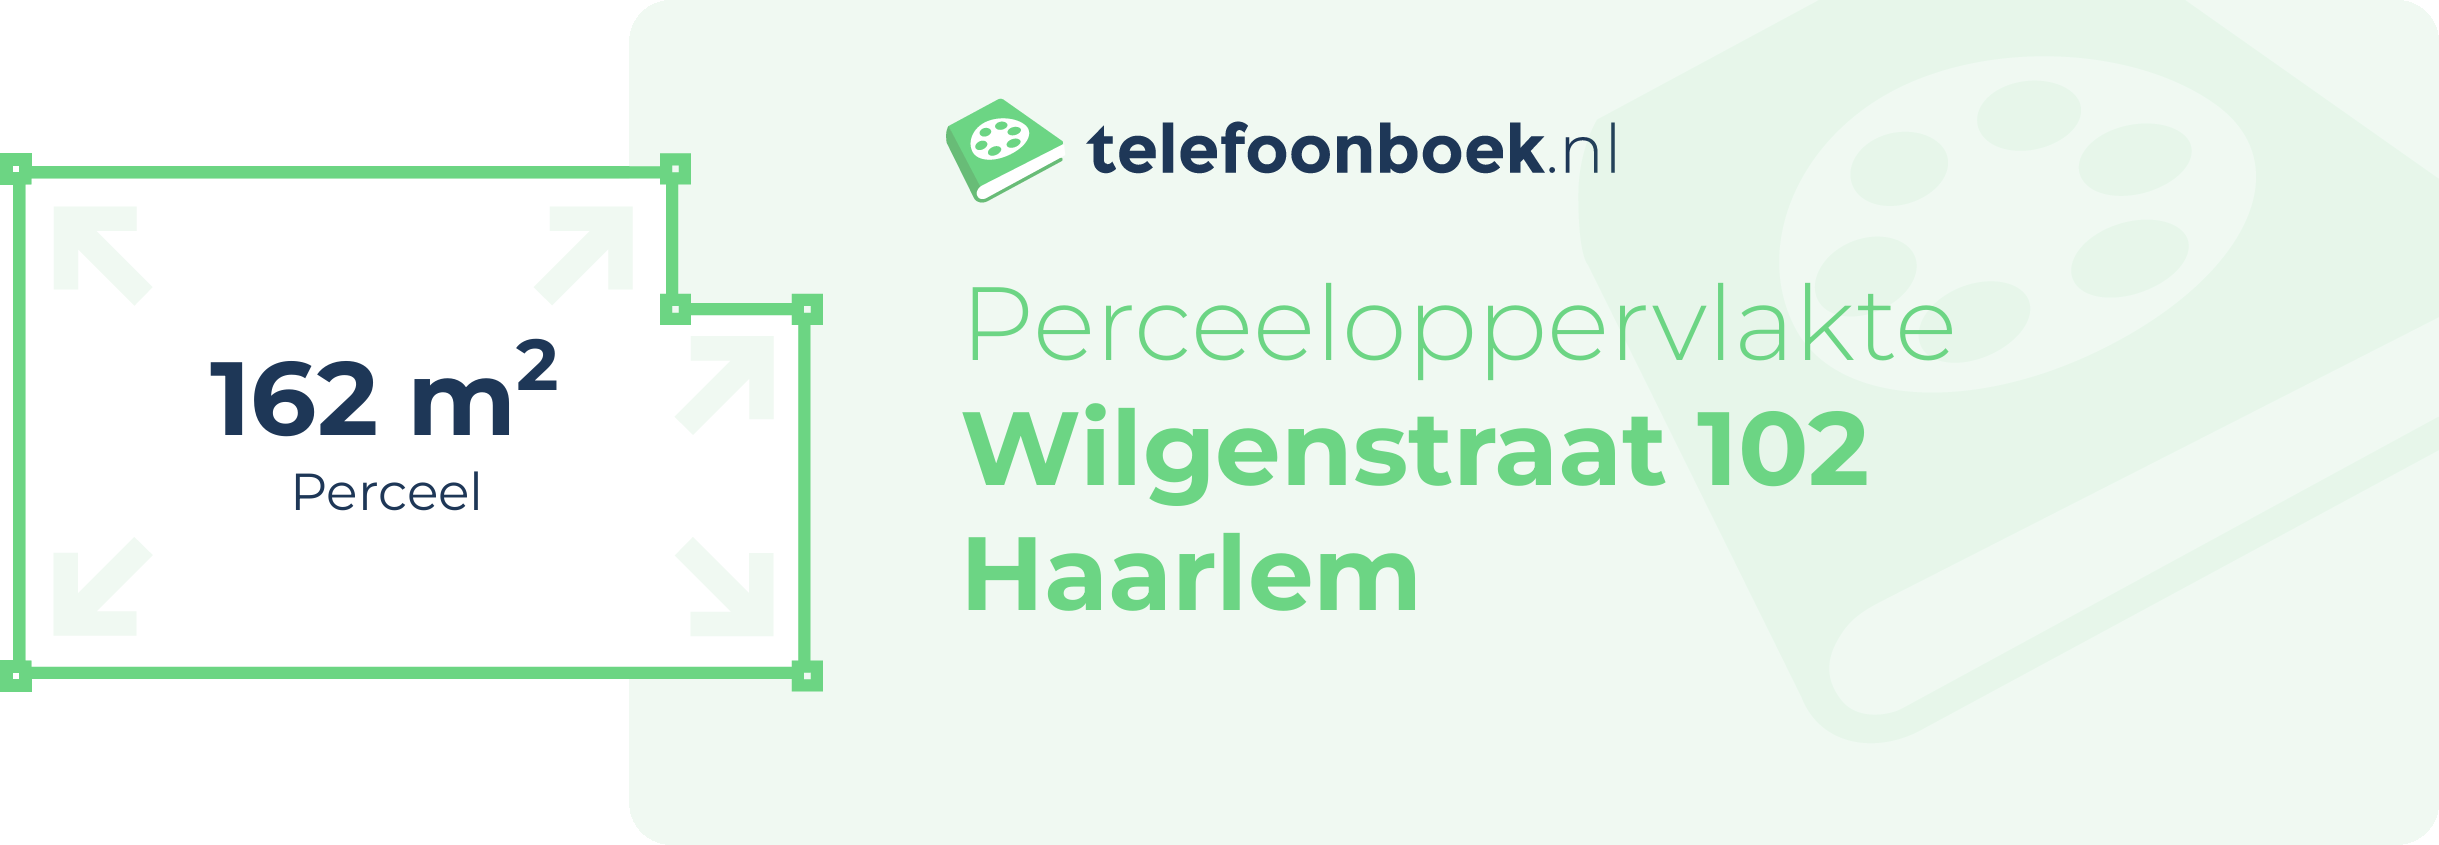 Perceeloppervlakte Wilgenstraat 102 Haarlem